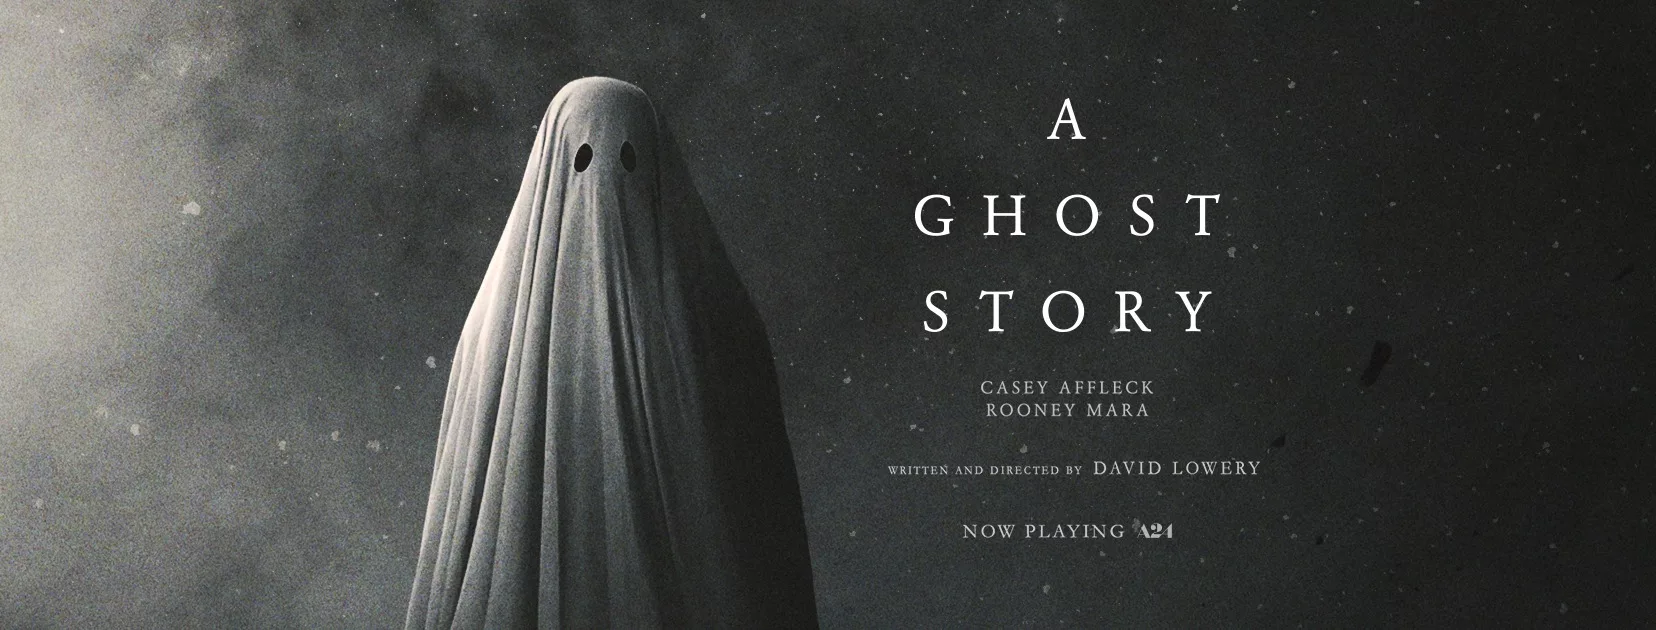 A Ghost Story, 2017 - Призрак, Longpost, Rooney Mara, Casey Affleck, Arthouse, Melodrama, Drama, , My